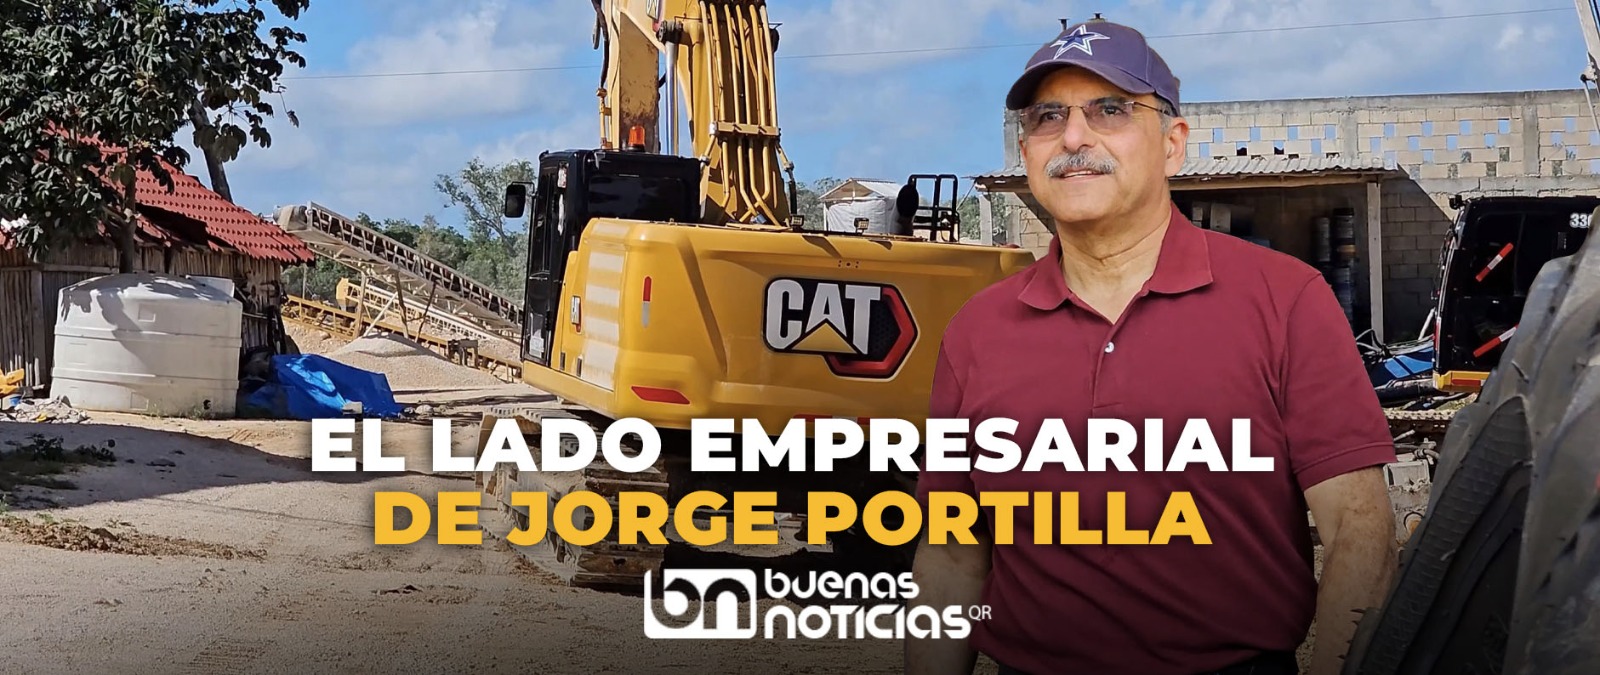 Una mirada a la vida empresarial del político Jorge Portilla (VIDEO)